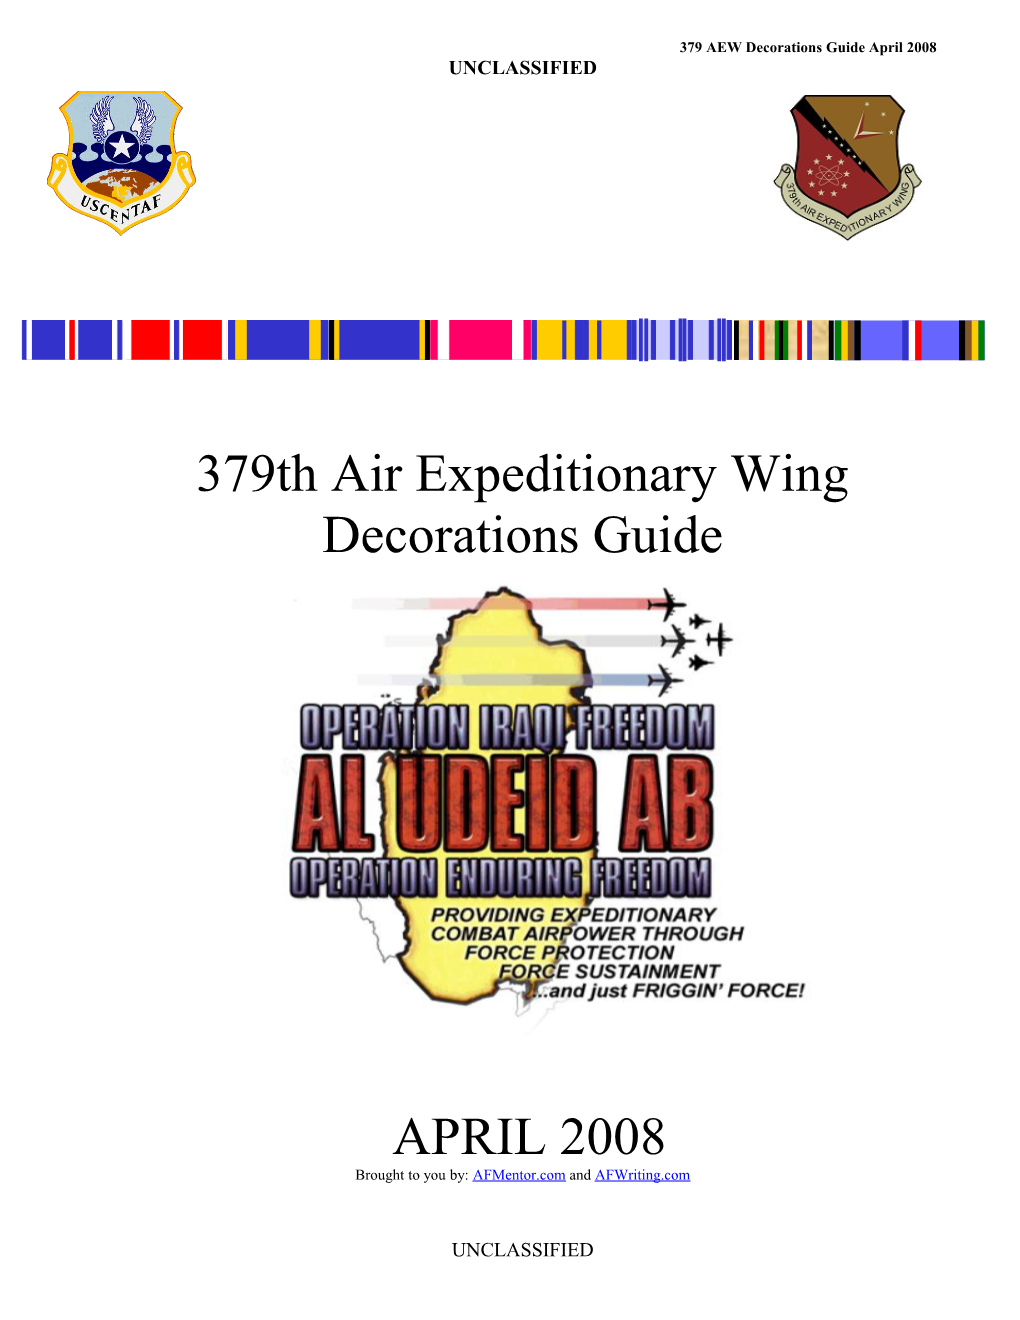 379 AEW Decoration Guide - April 2008